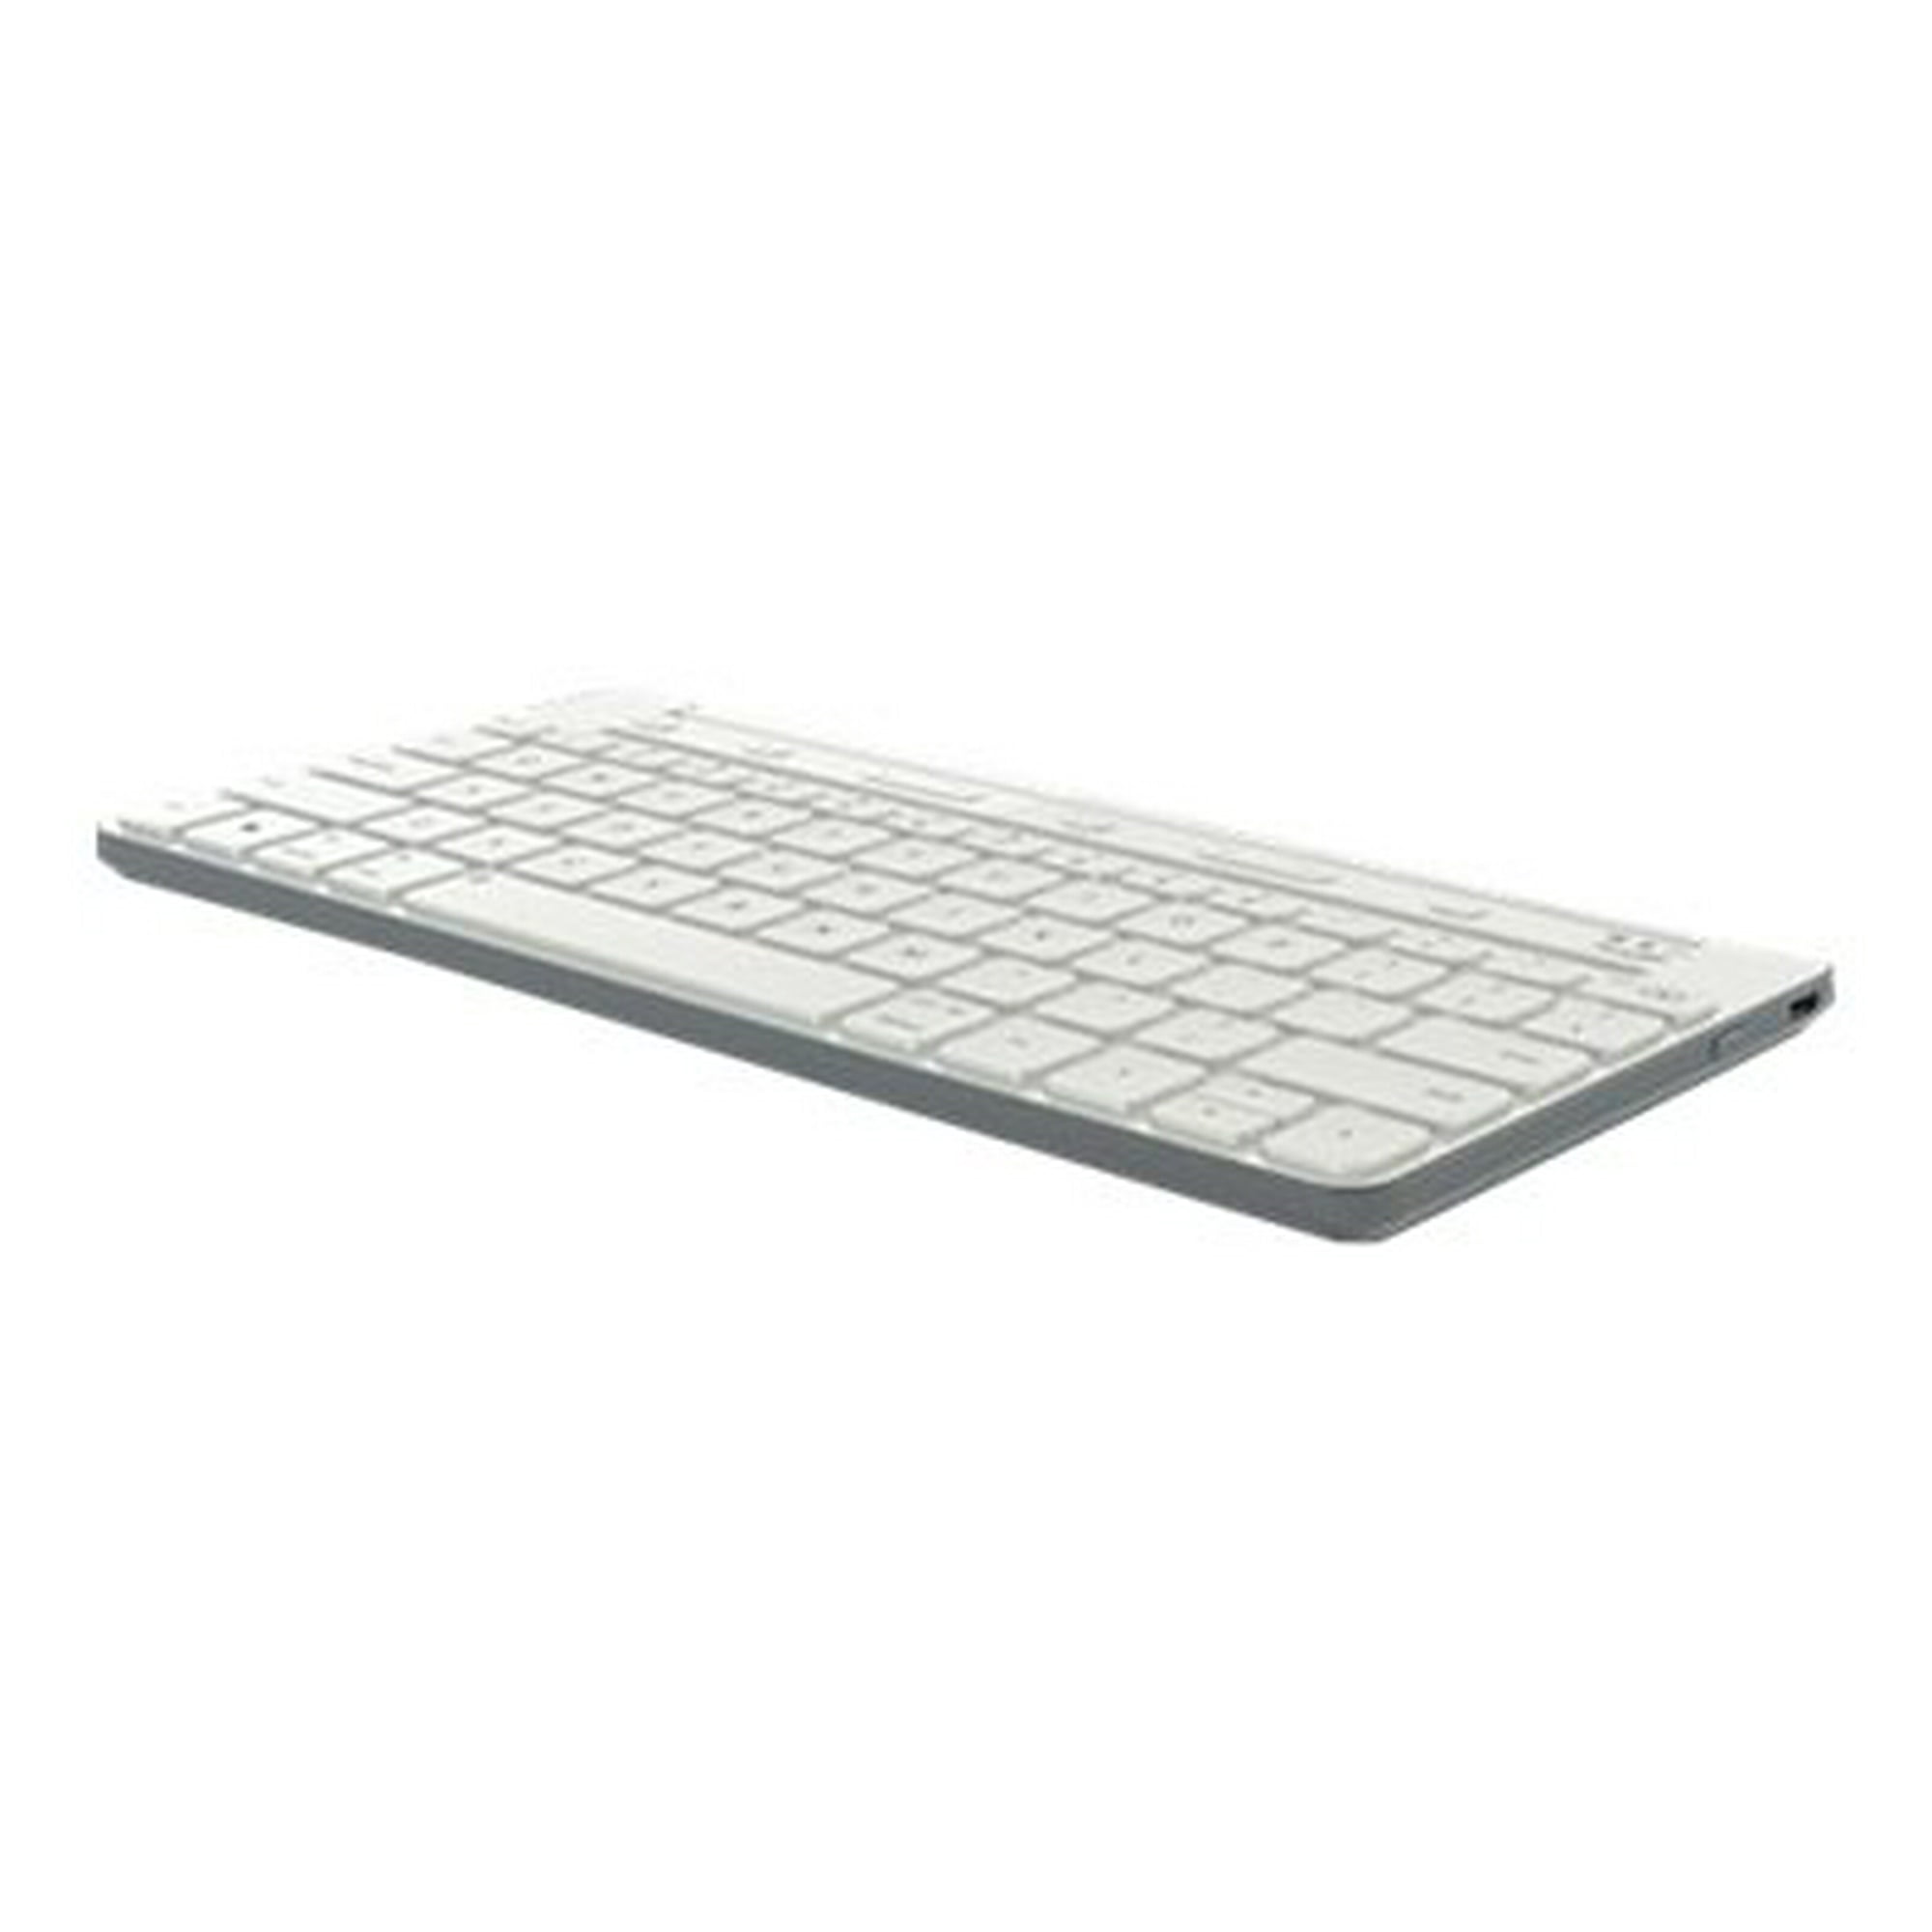 Microsoft Universal Mobile Keyboard - Keyboard - Bluetooth - US - gray